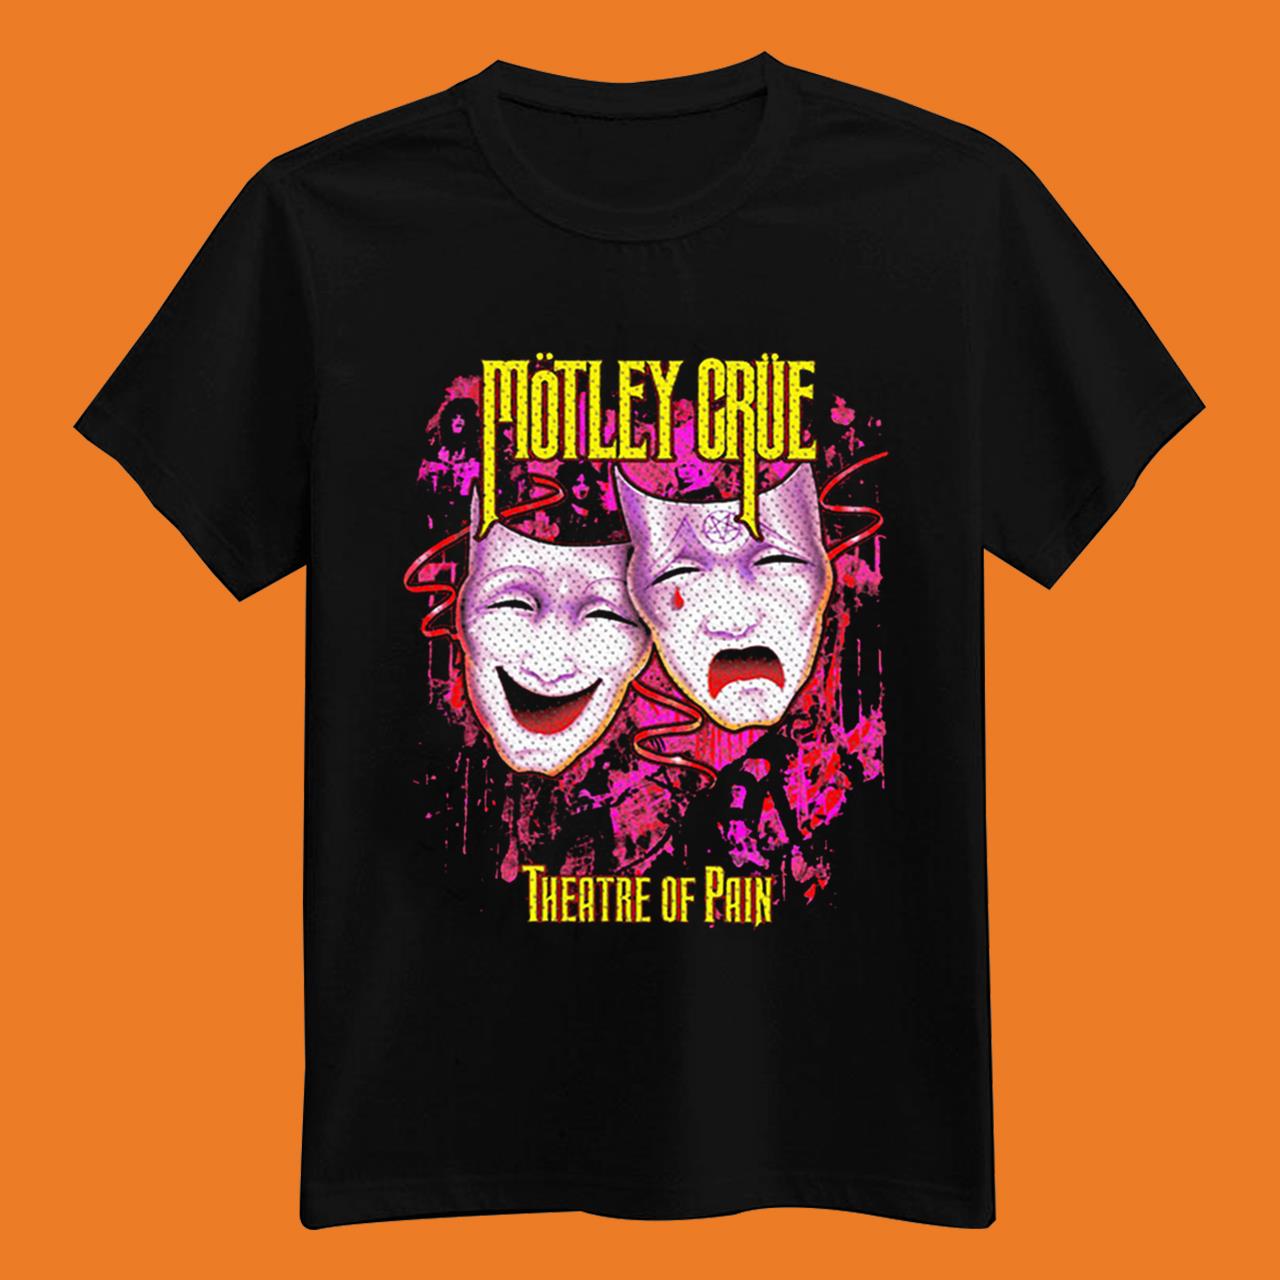 Motley Crue Two-Faced T-Shirt